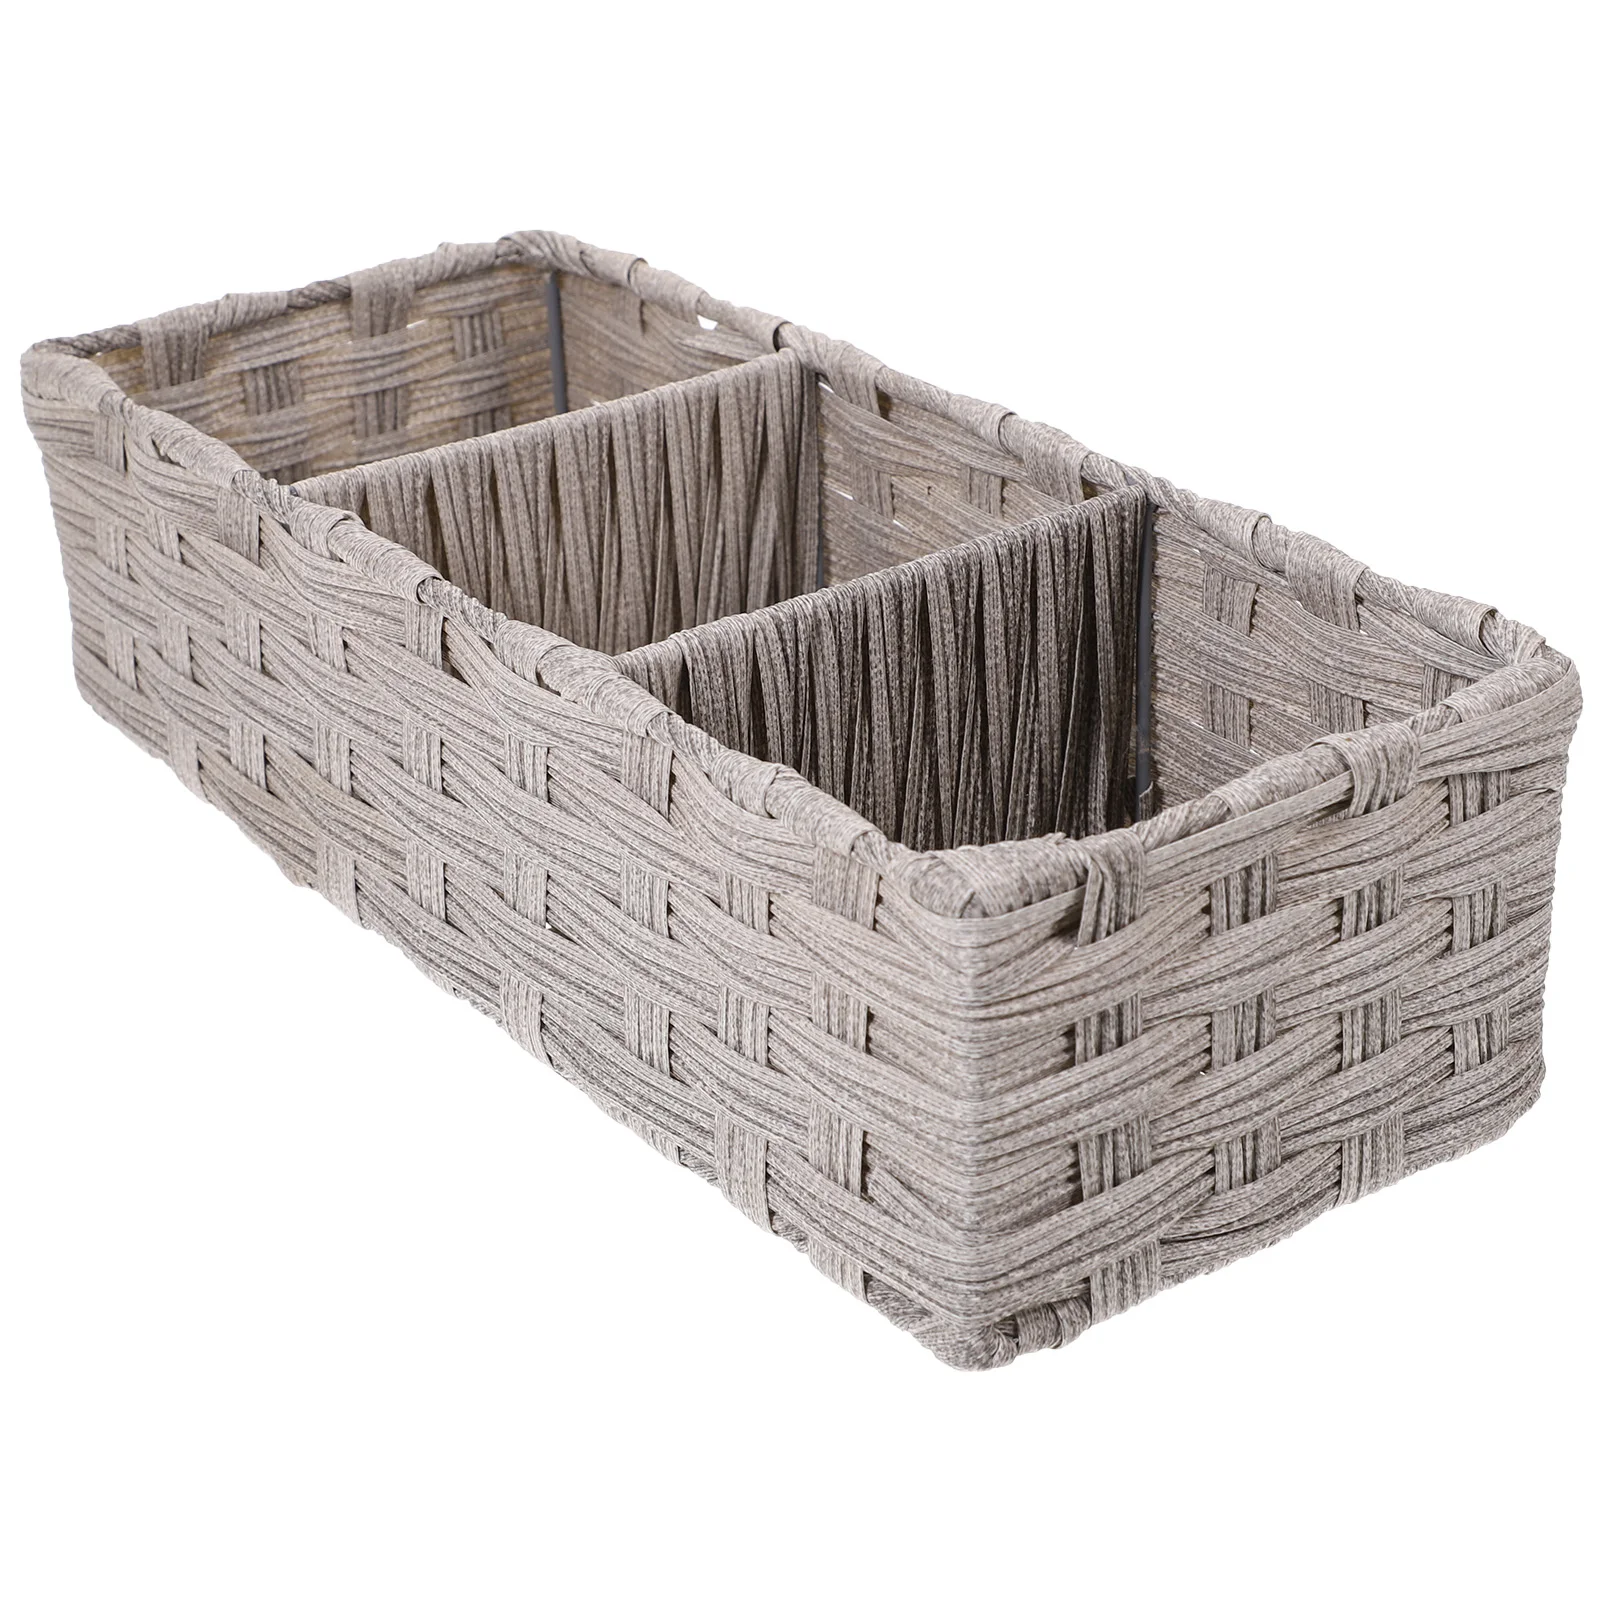 

Basket Wicker Storage Organizer Baskets Woven Rattan Holder Seagrass Toilet Coffee Divided Bathroom Hyacinth Boxtea Paper